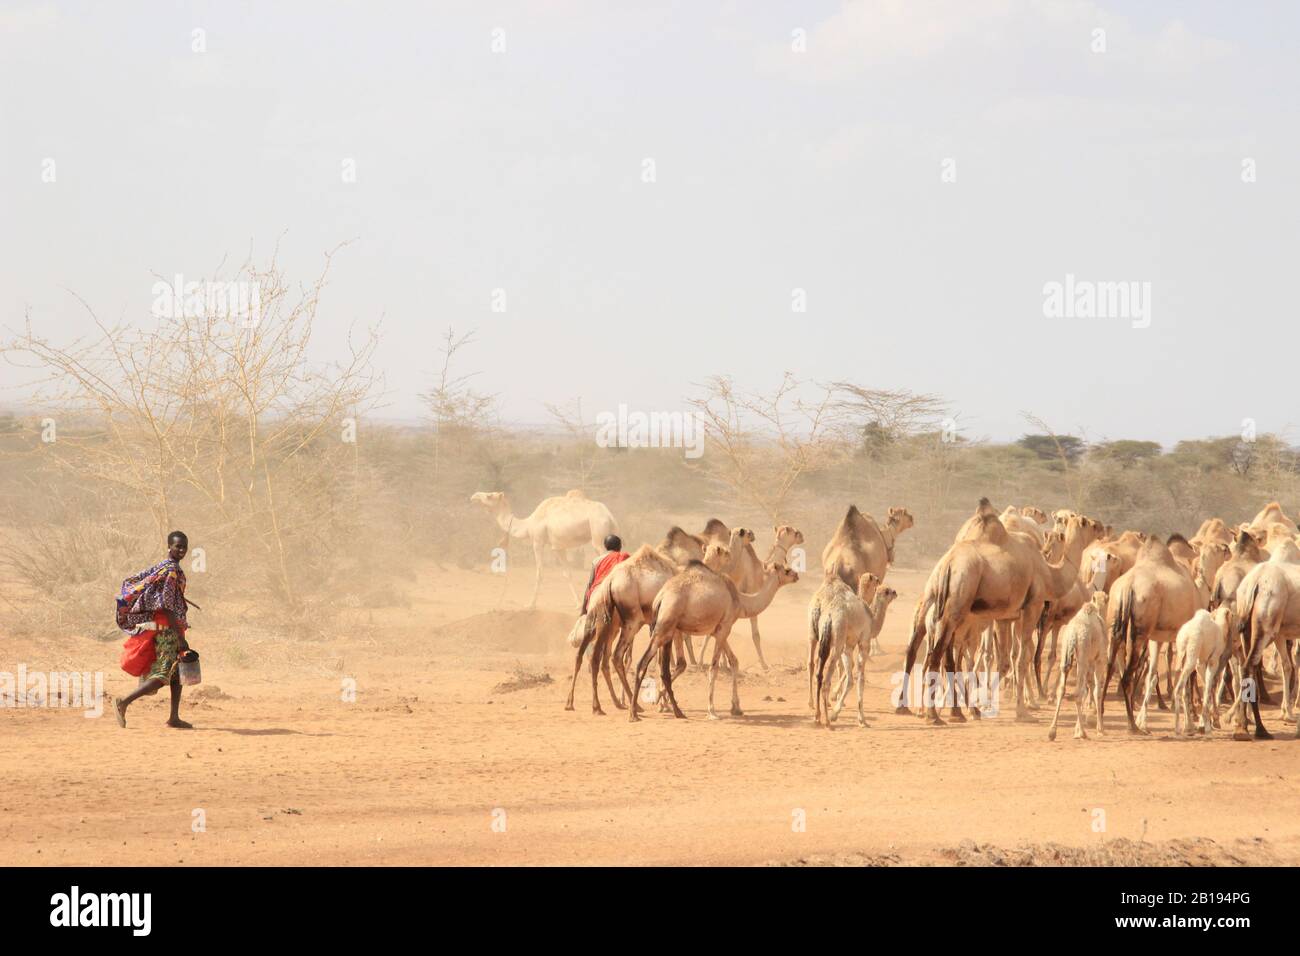 Marsabit, Kenya - January 16, 2015: African woman shepherd from the Samburu tribe (a related Masai tribe) in the national costume shepherds a flock of Stock Photo